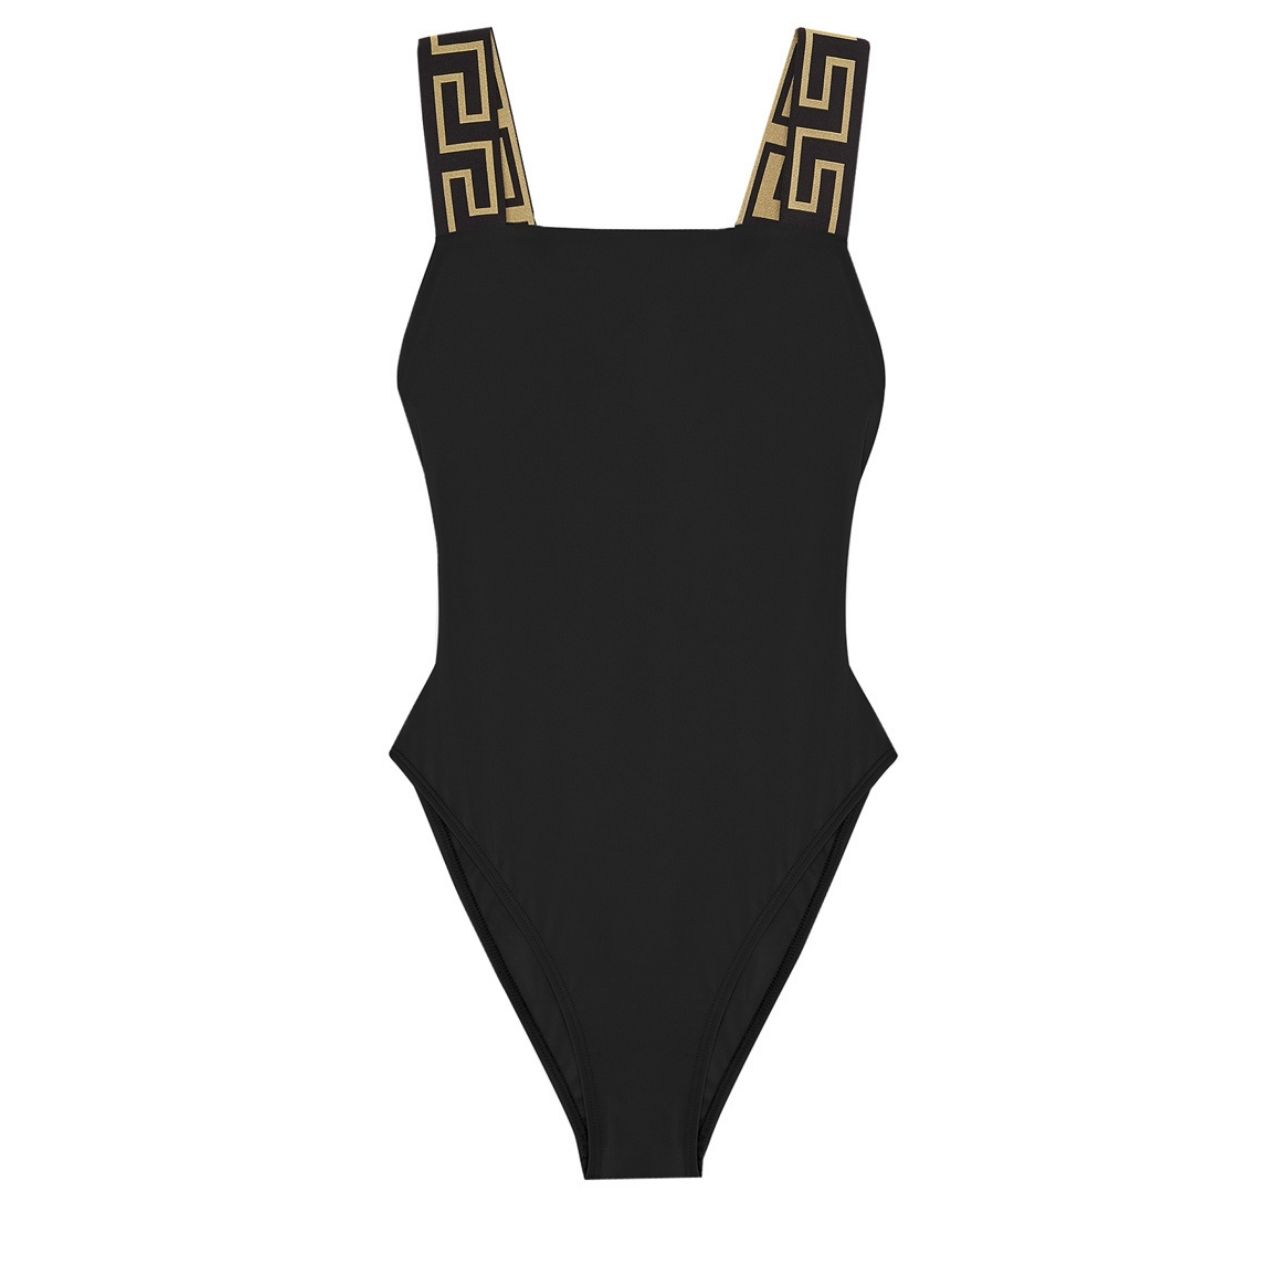 Black versace one-piece bathing suit